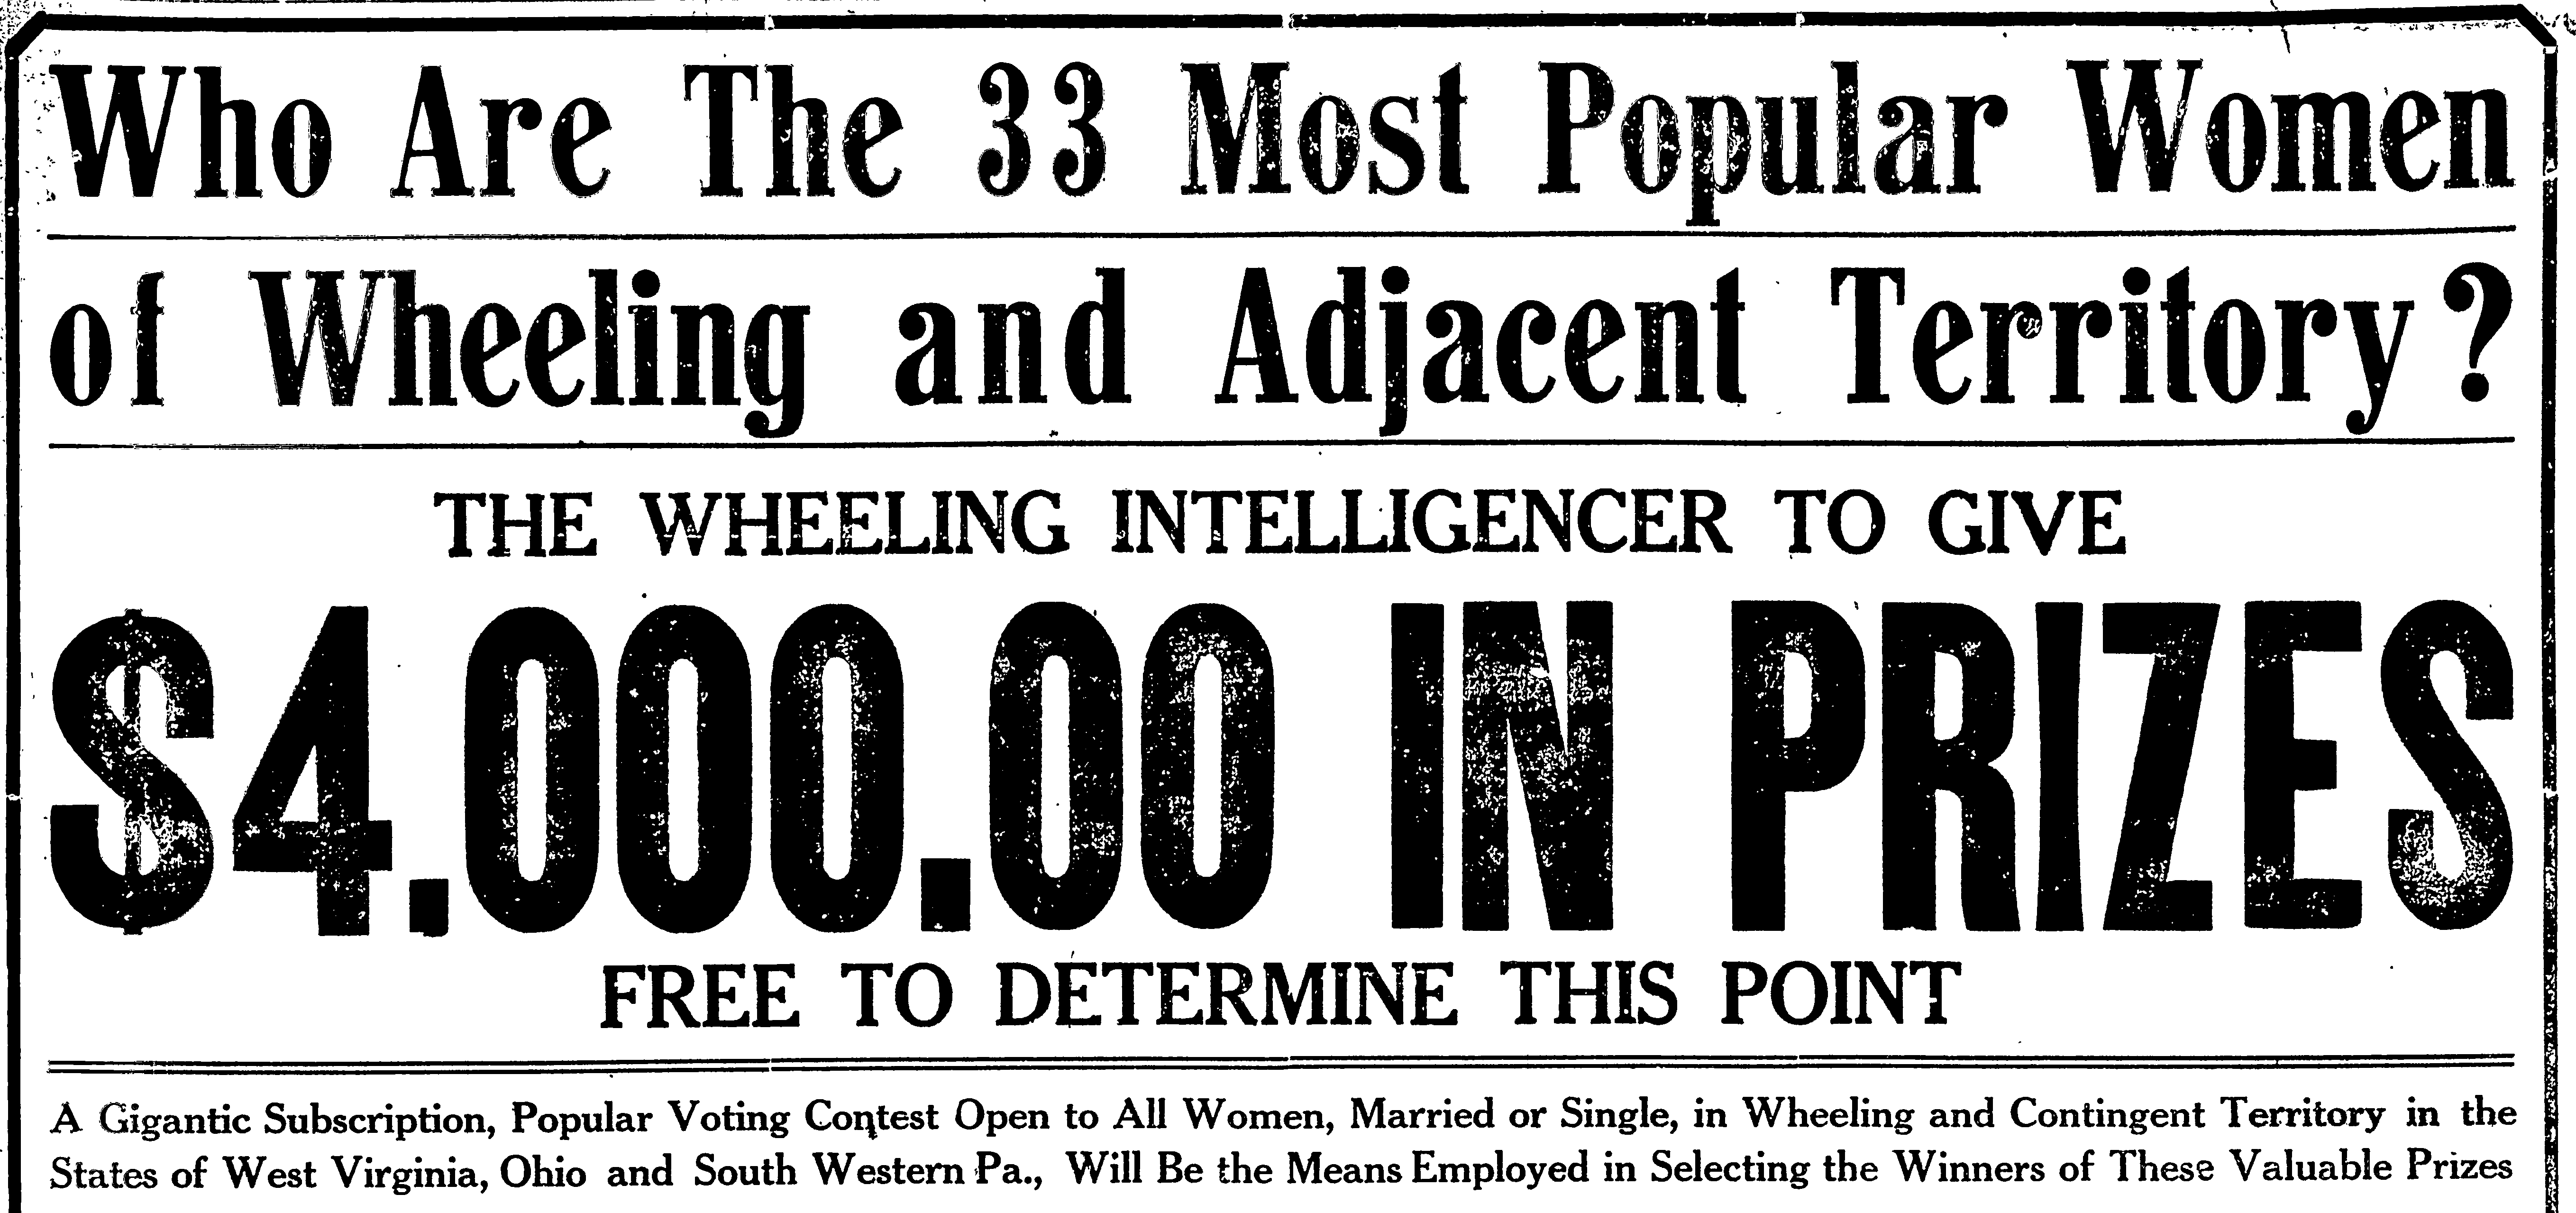 Headline of Wheeling Women popularity contest